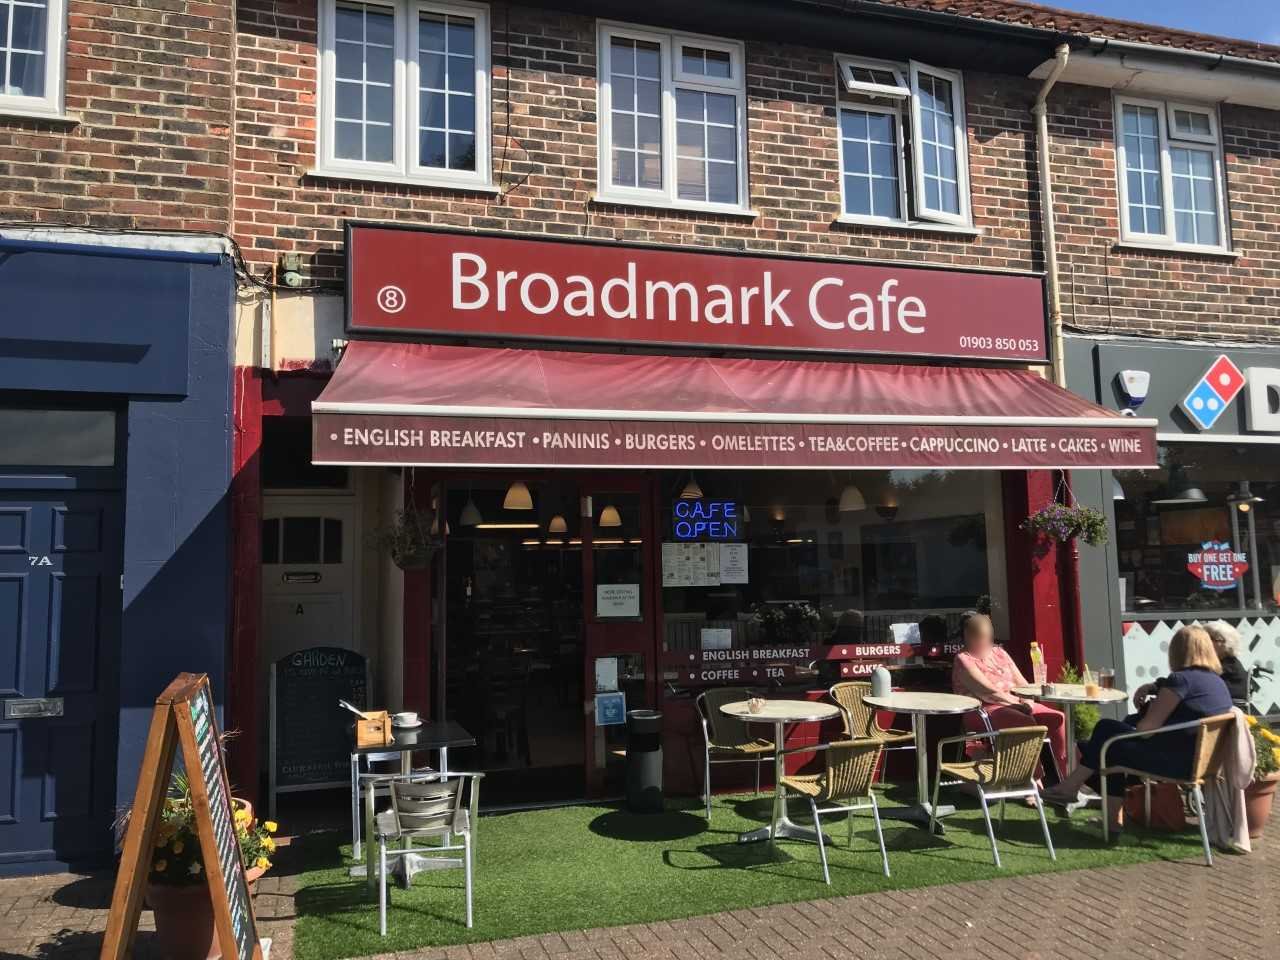 Broadmark Cafe in Rustington